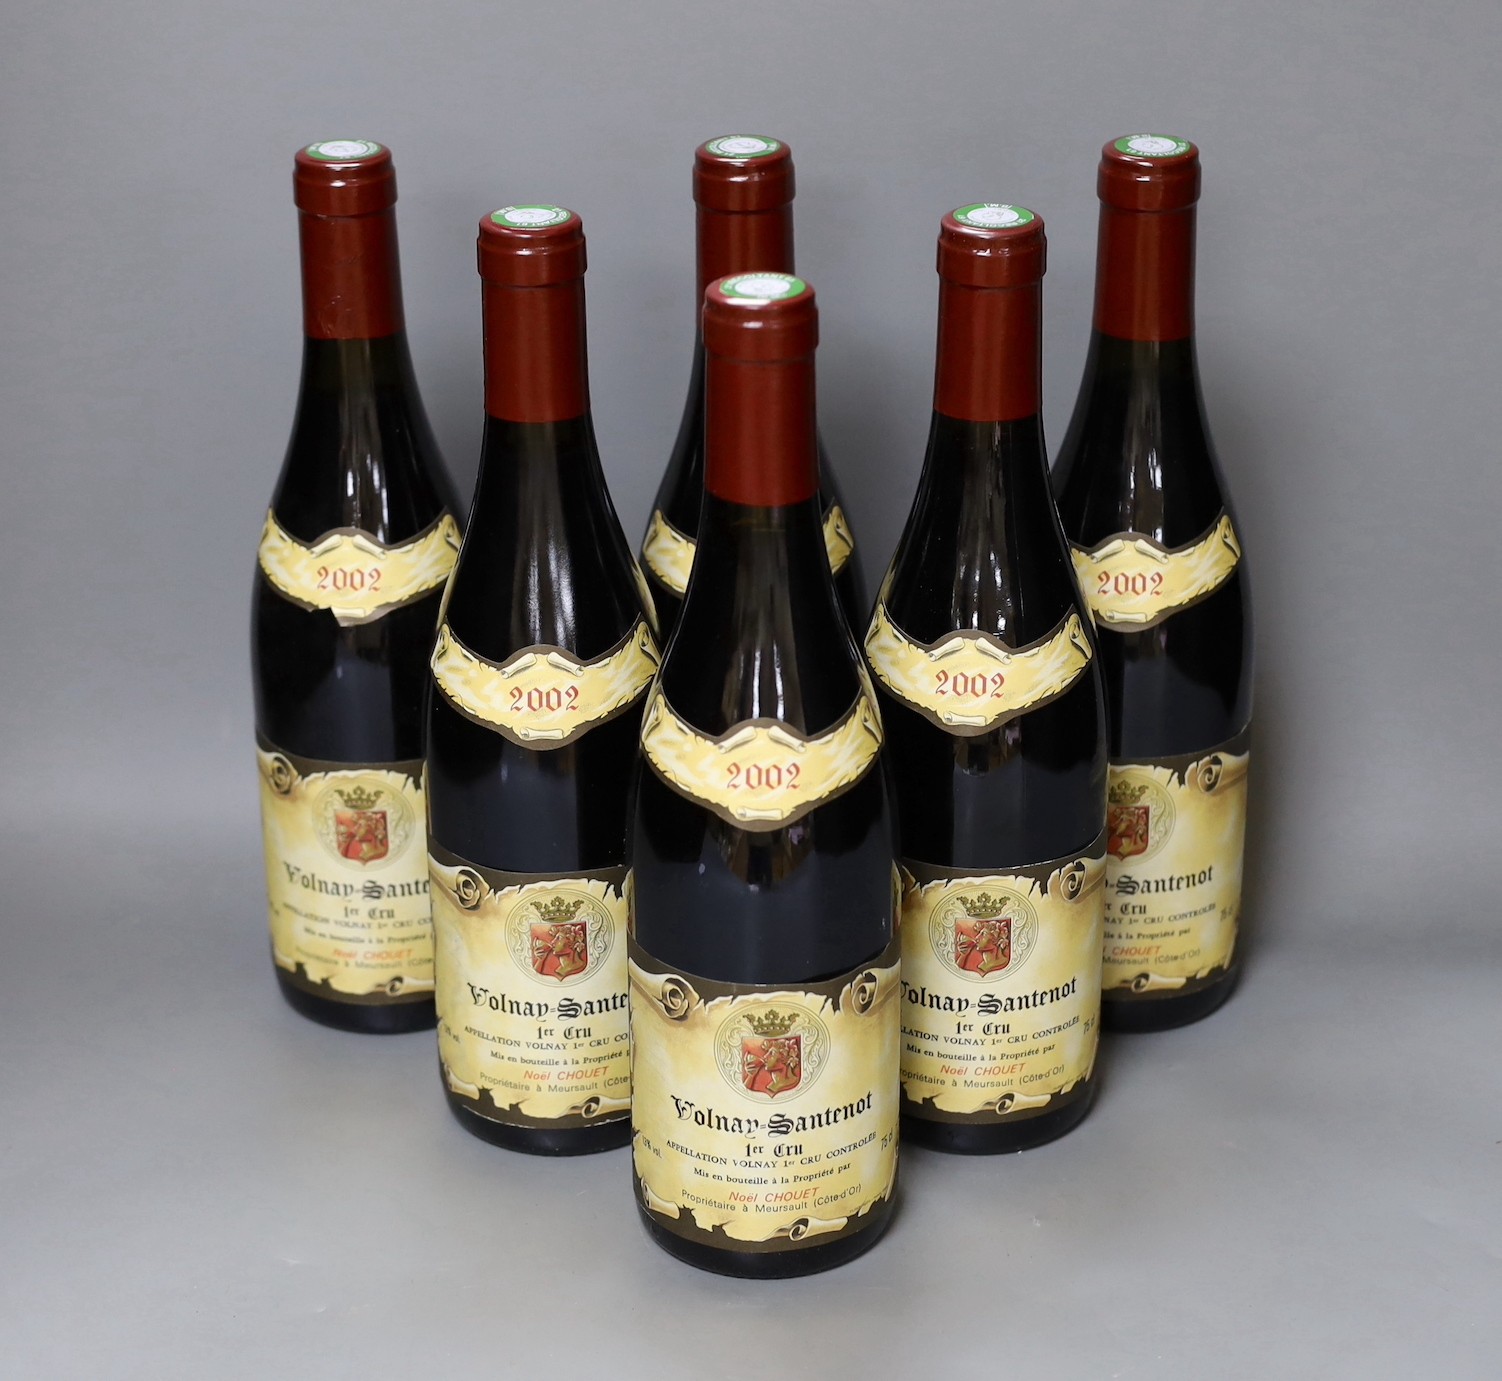 Six bottles of Volnay Santenot Premier Cru, Noel Chouet, 2002.